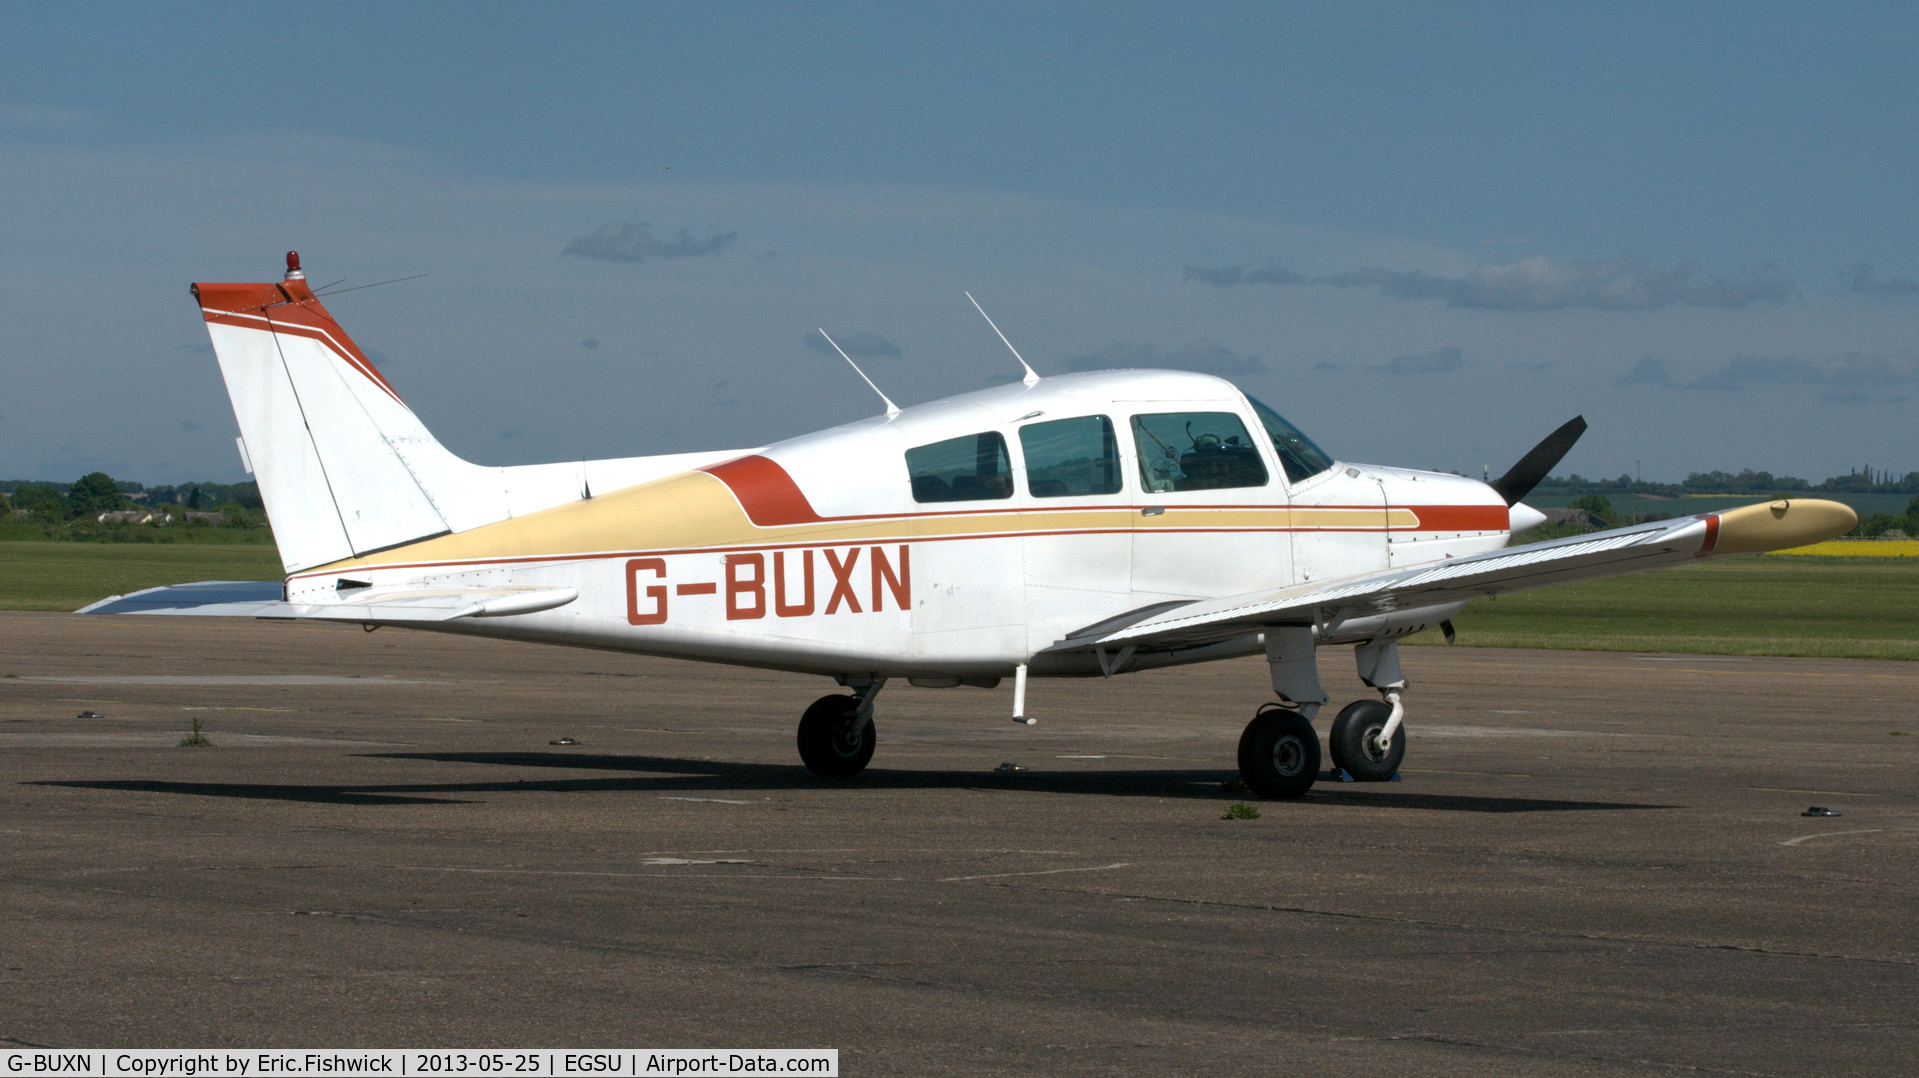 G-BUXN, 1976 Beech C23 Sundowner 180 Sundowner 180 C/N M-1752, 2. G-BUXN at Duxford Airfield.